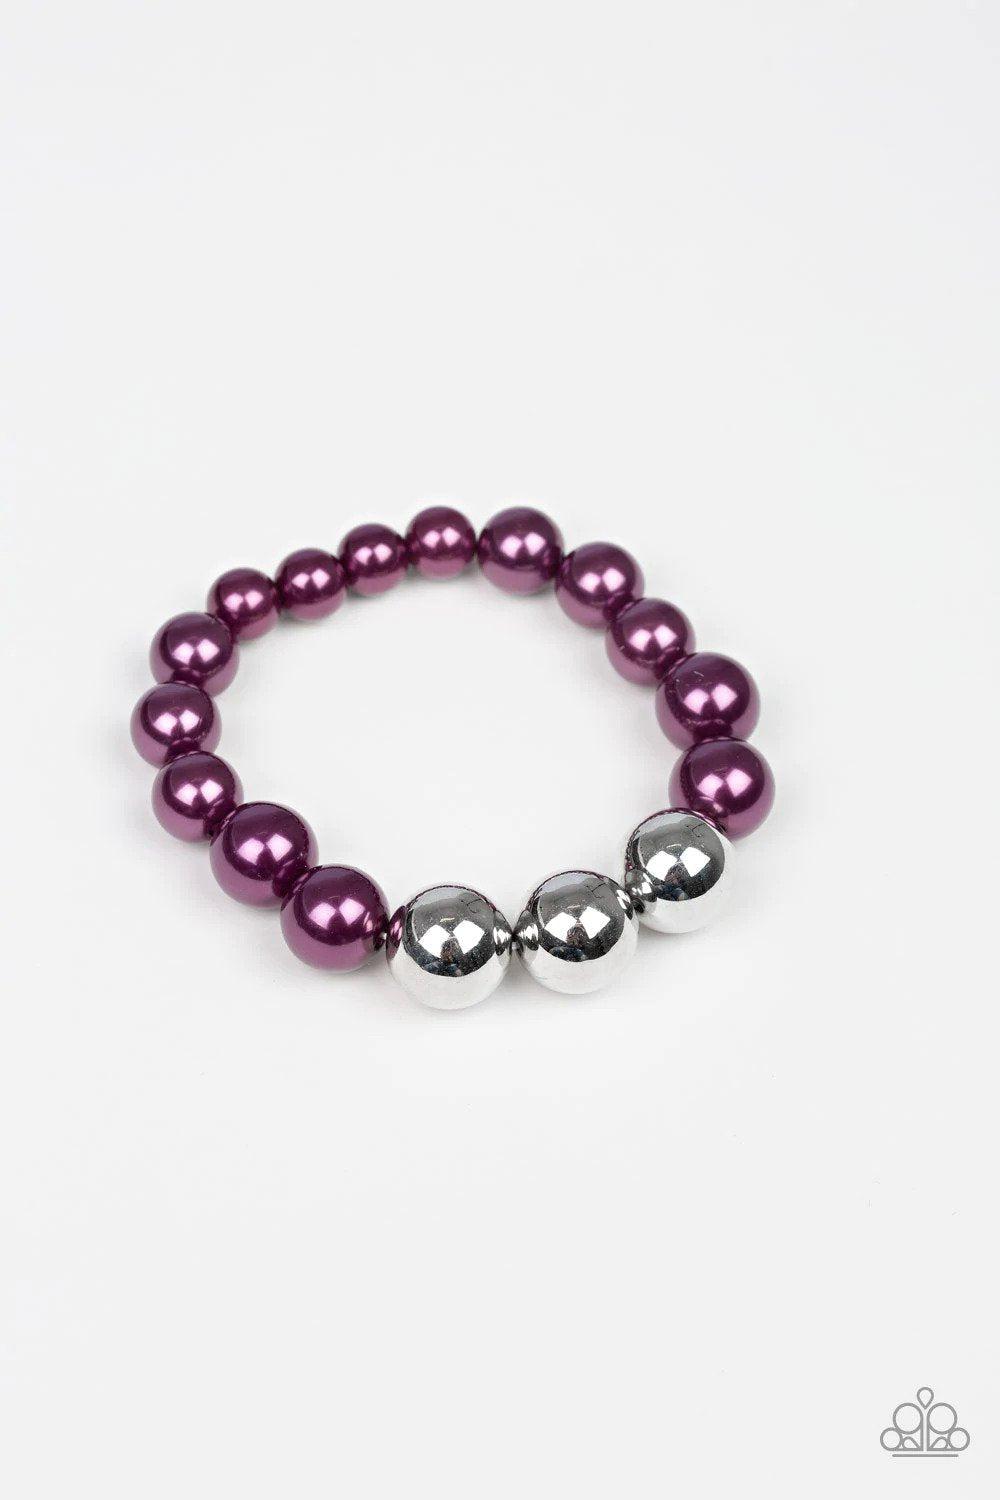 All Dressed UPTOWN Purple Pearl Bracelet - Paparazzi Accessories- lightbox - CarasShop.com - $5 Jewelry by Cara Jewels